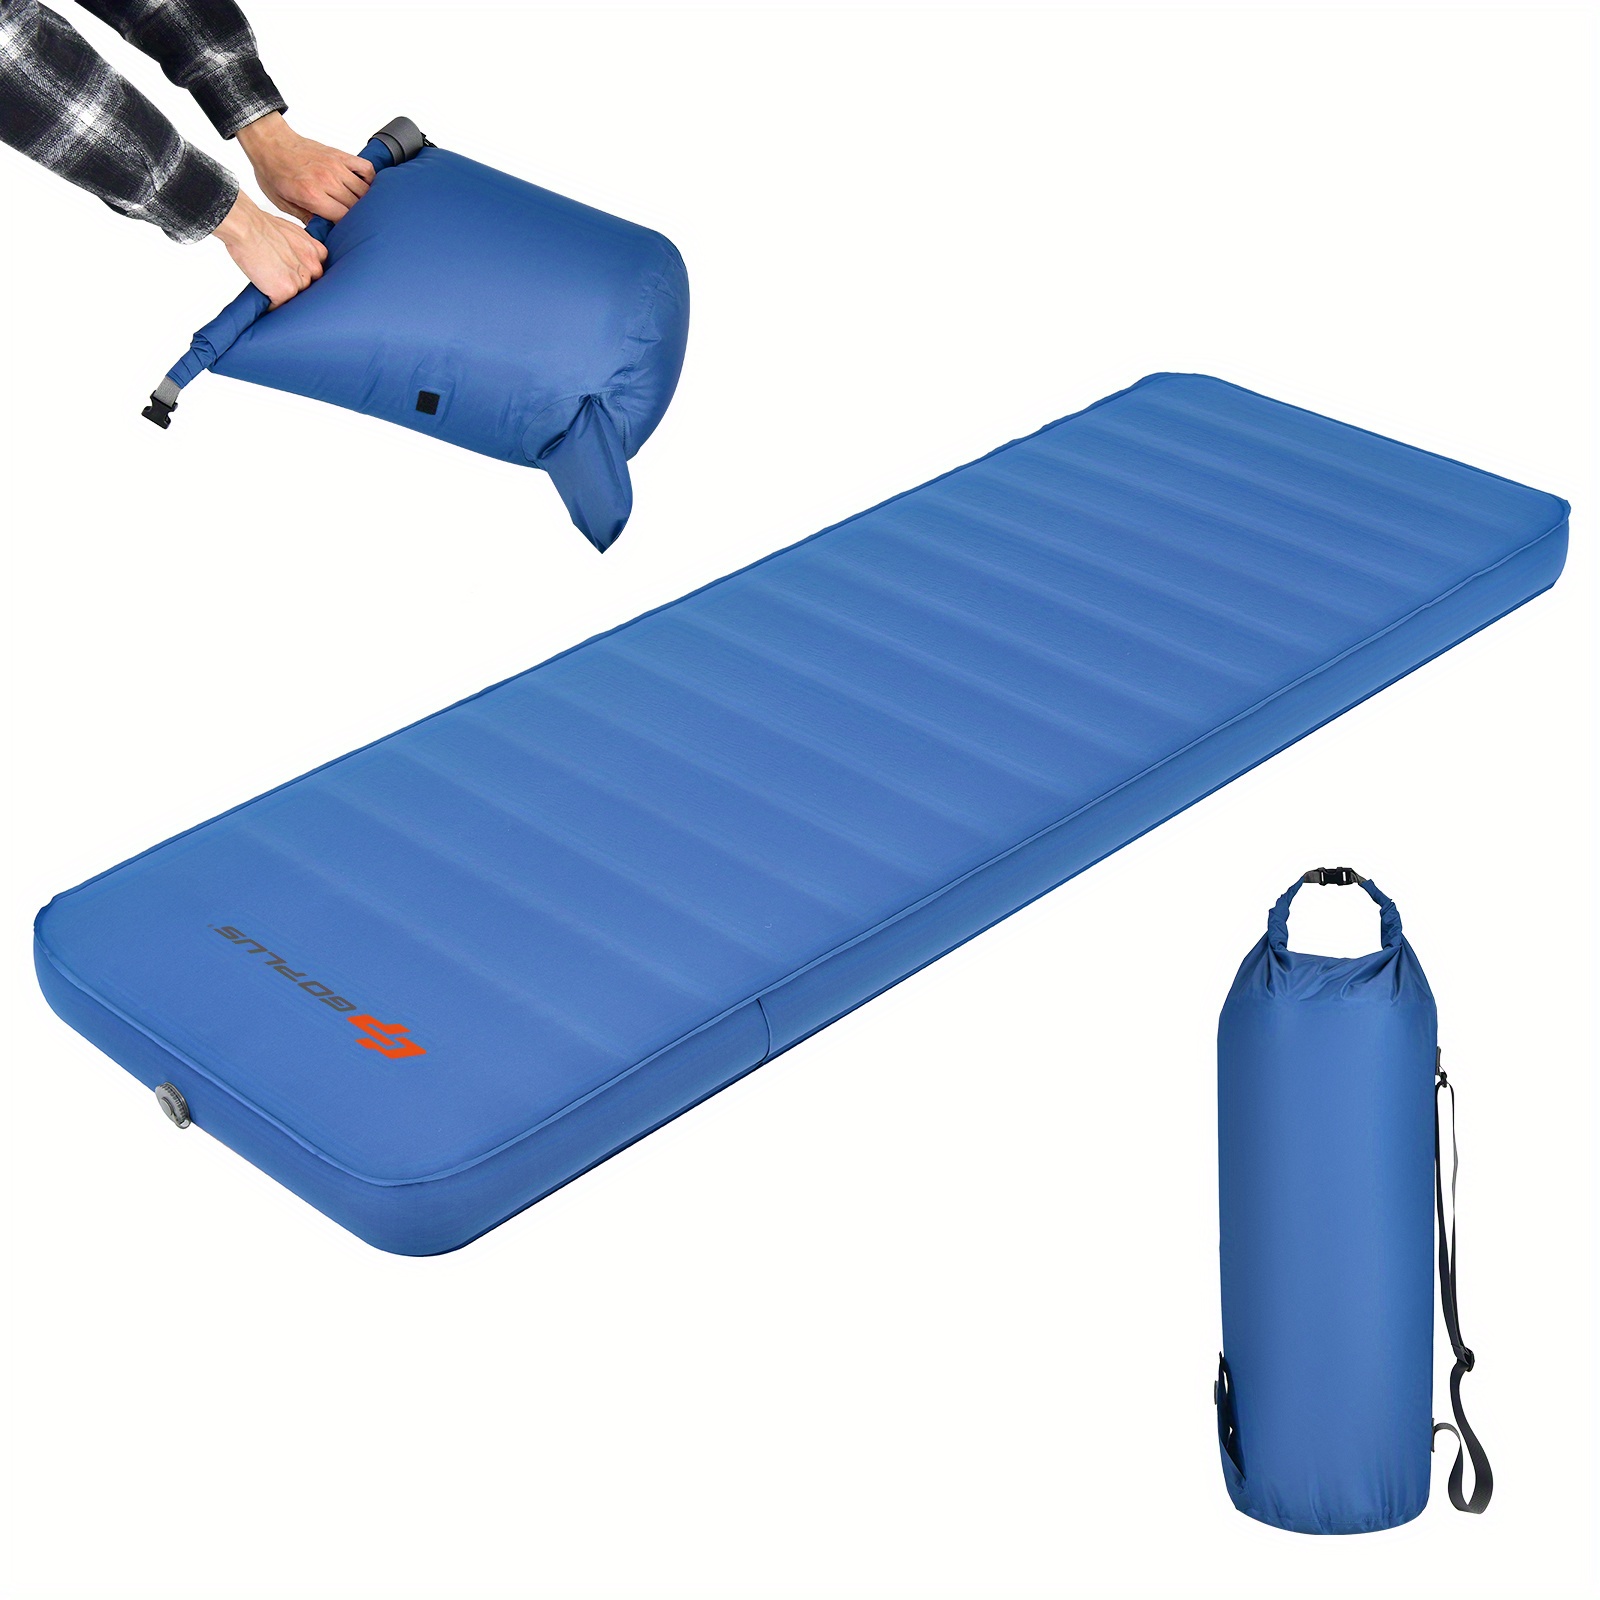 

Multigot Folding Sleeping Pad, Self Inflating Camping Mattress With Carrying Bag Blue